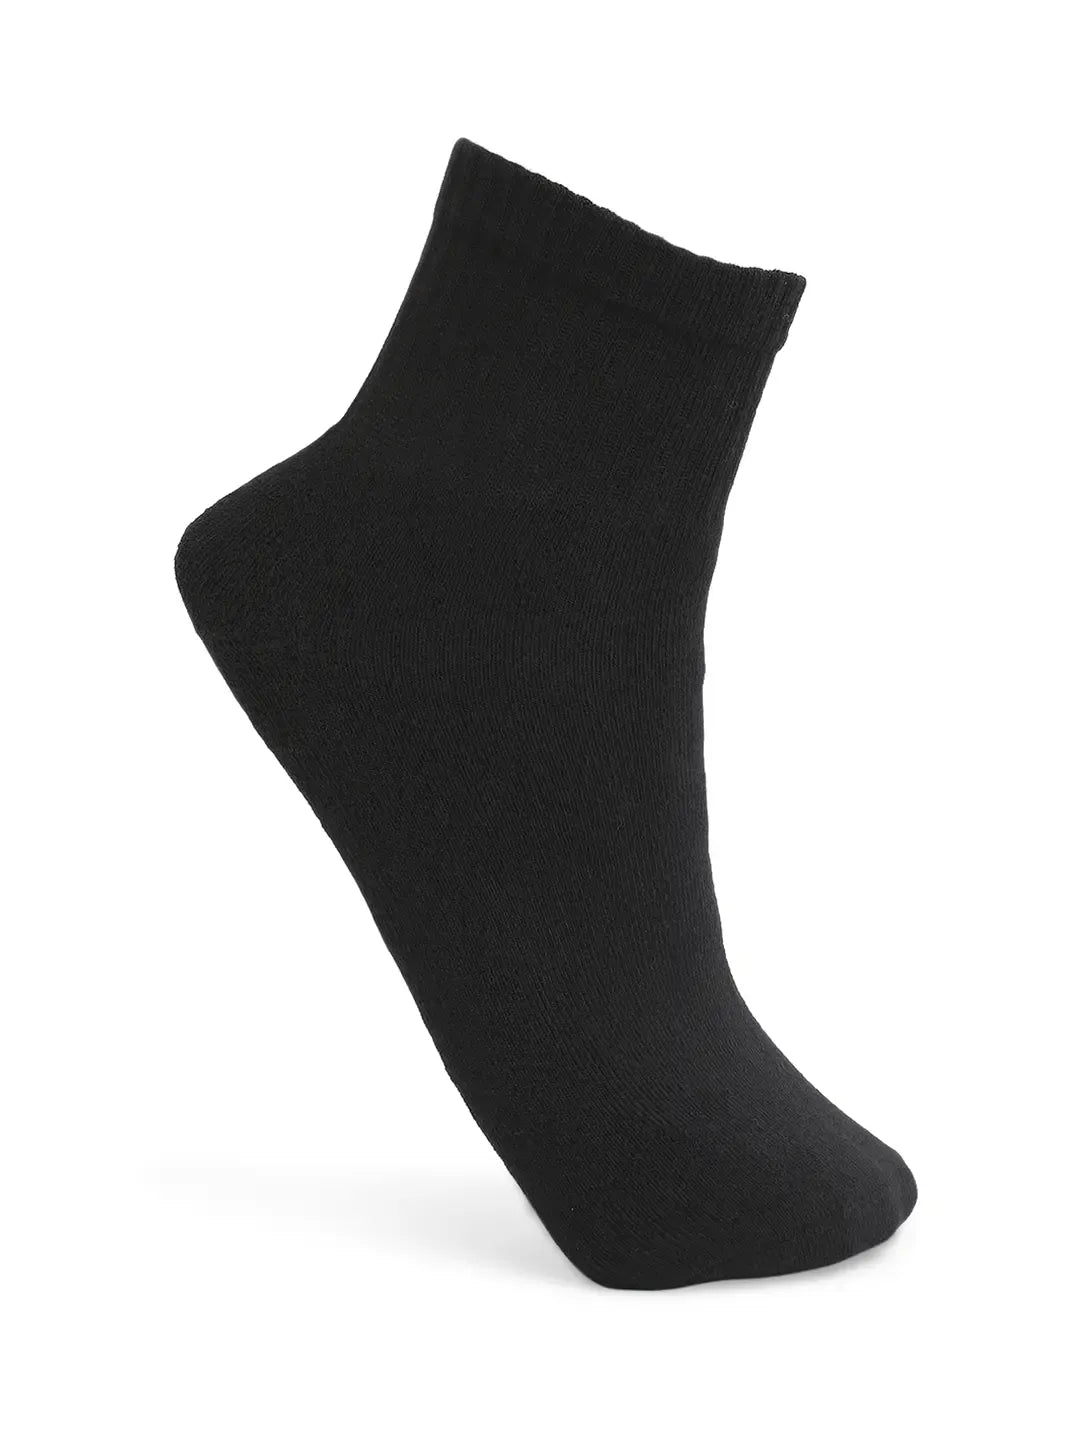 Men Premium Black Cotton Socks - Pack Of 3- UnderJeans by Spykar